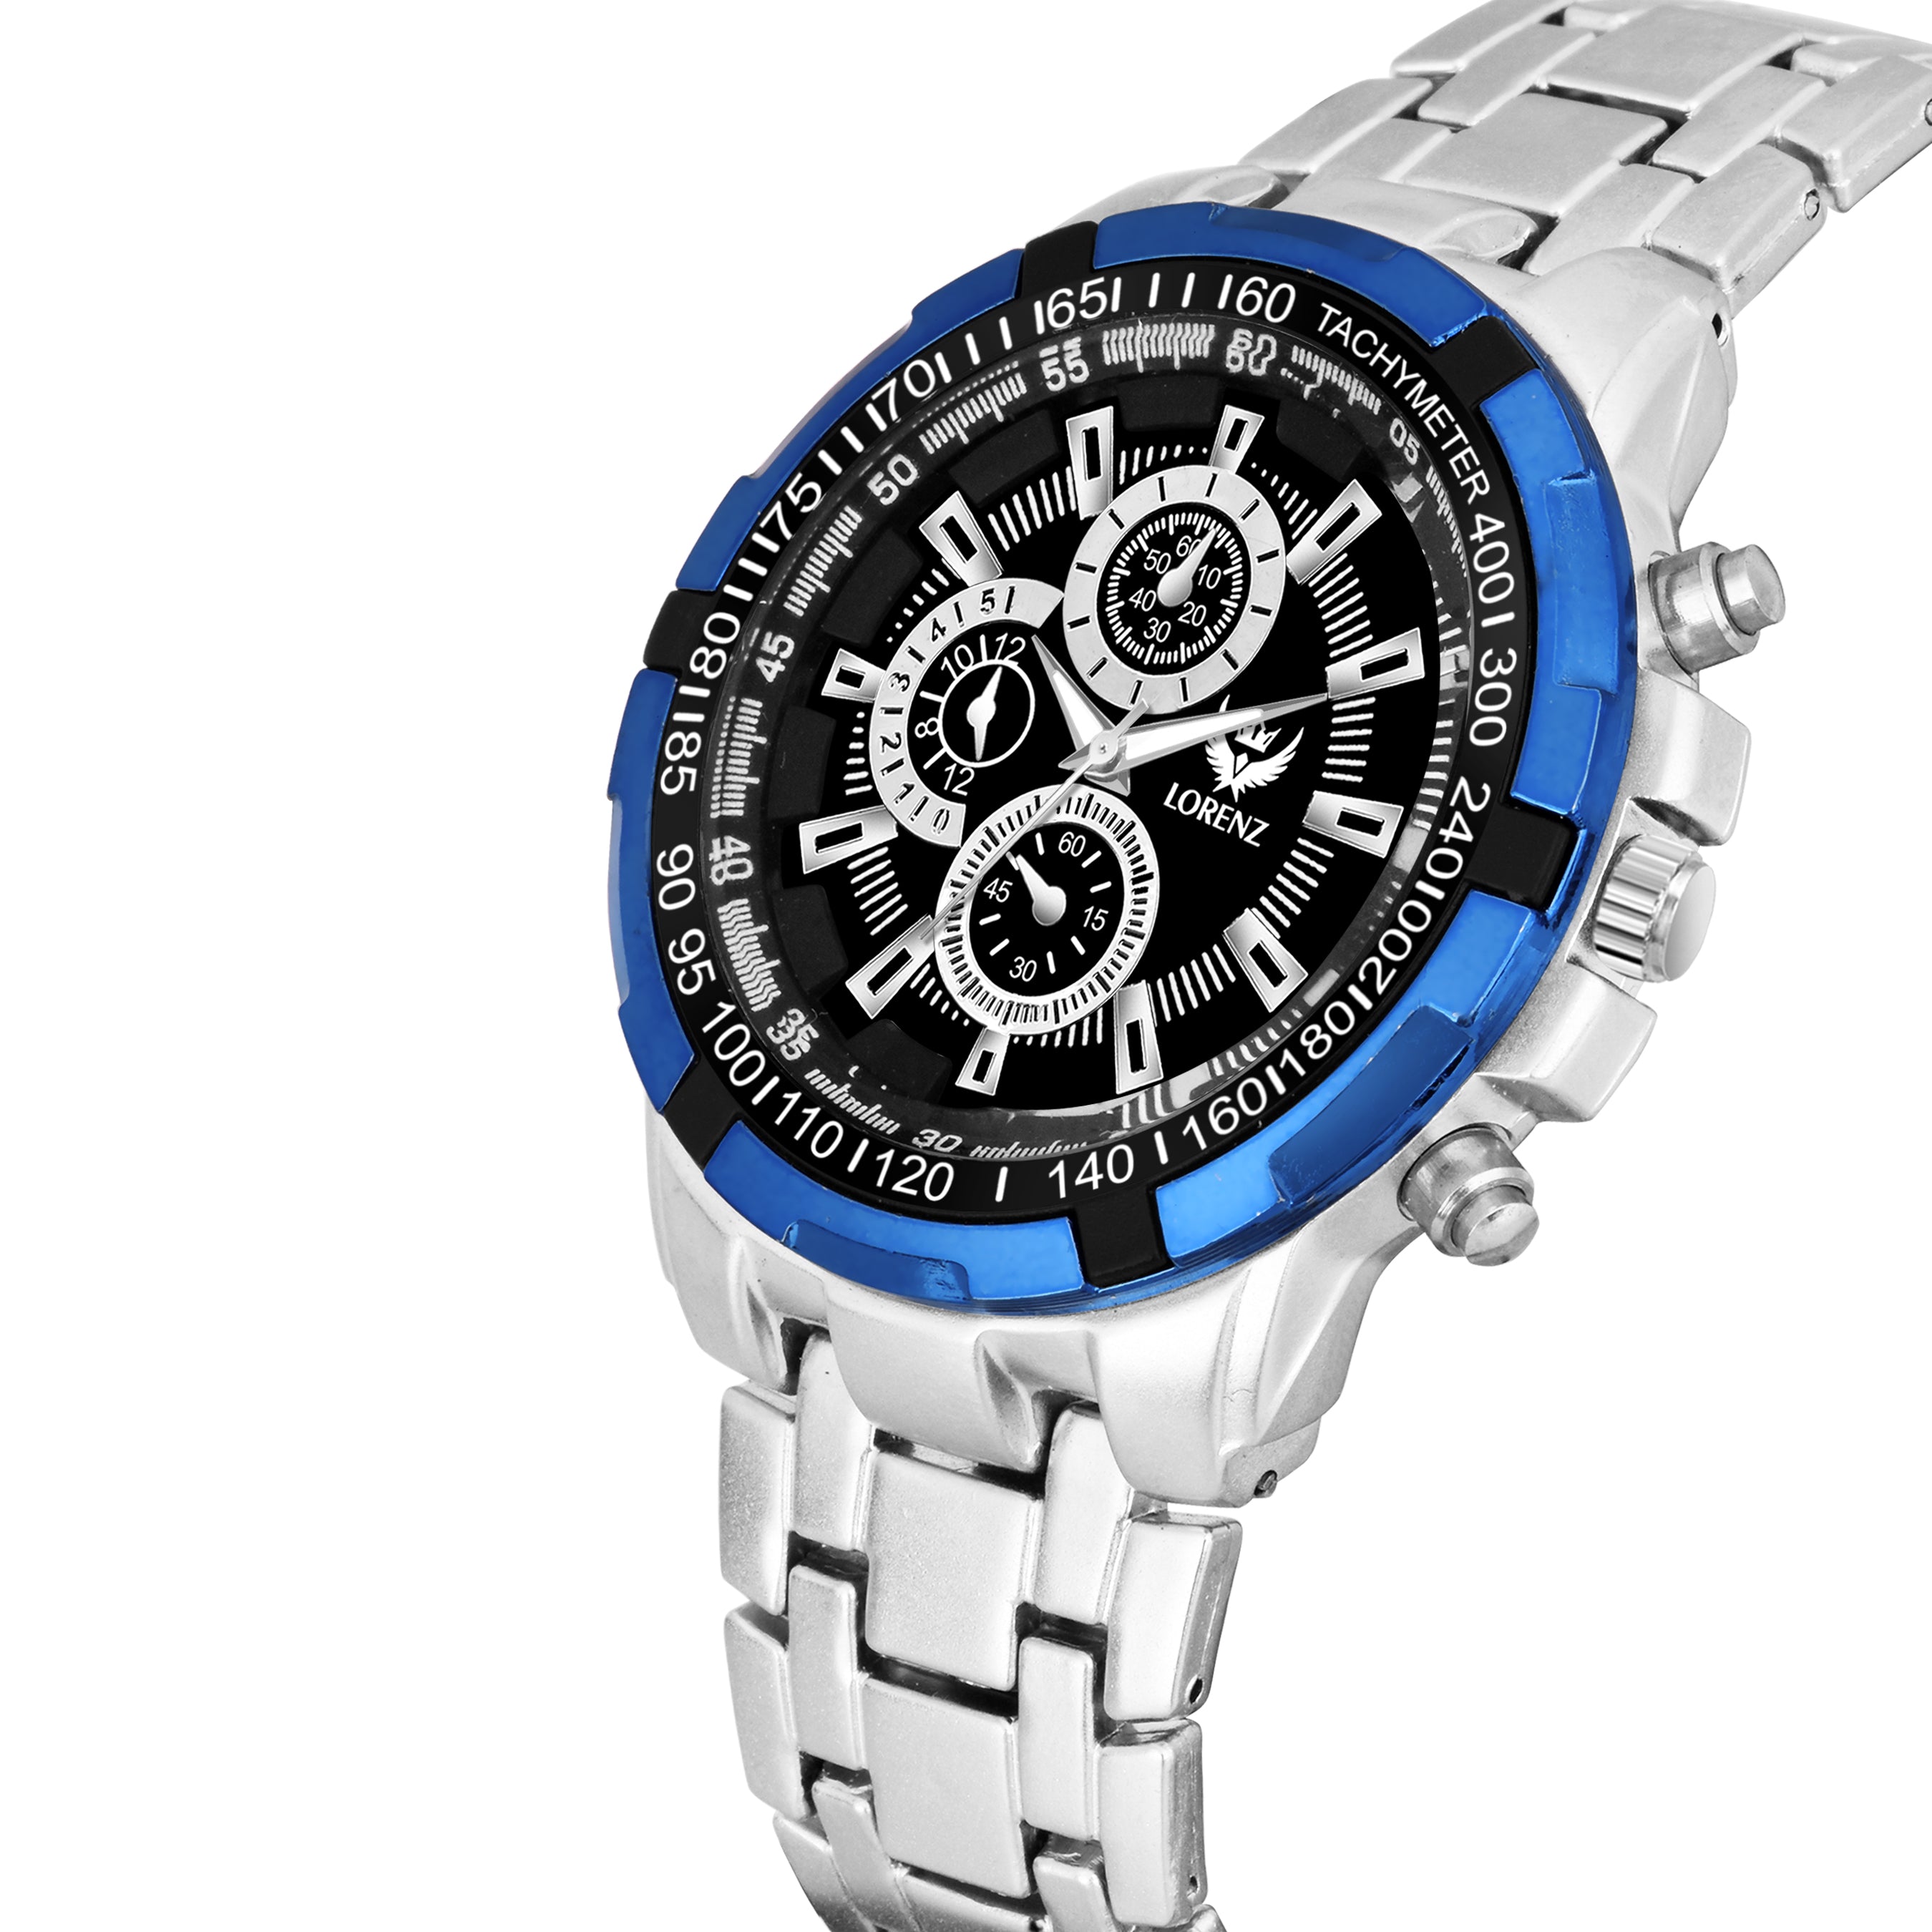 Lorenz Unisex Black & Blue Dial Analog Watch